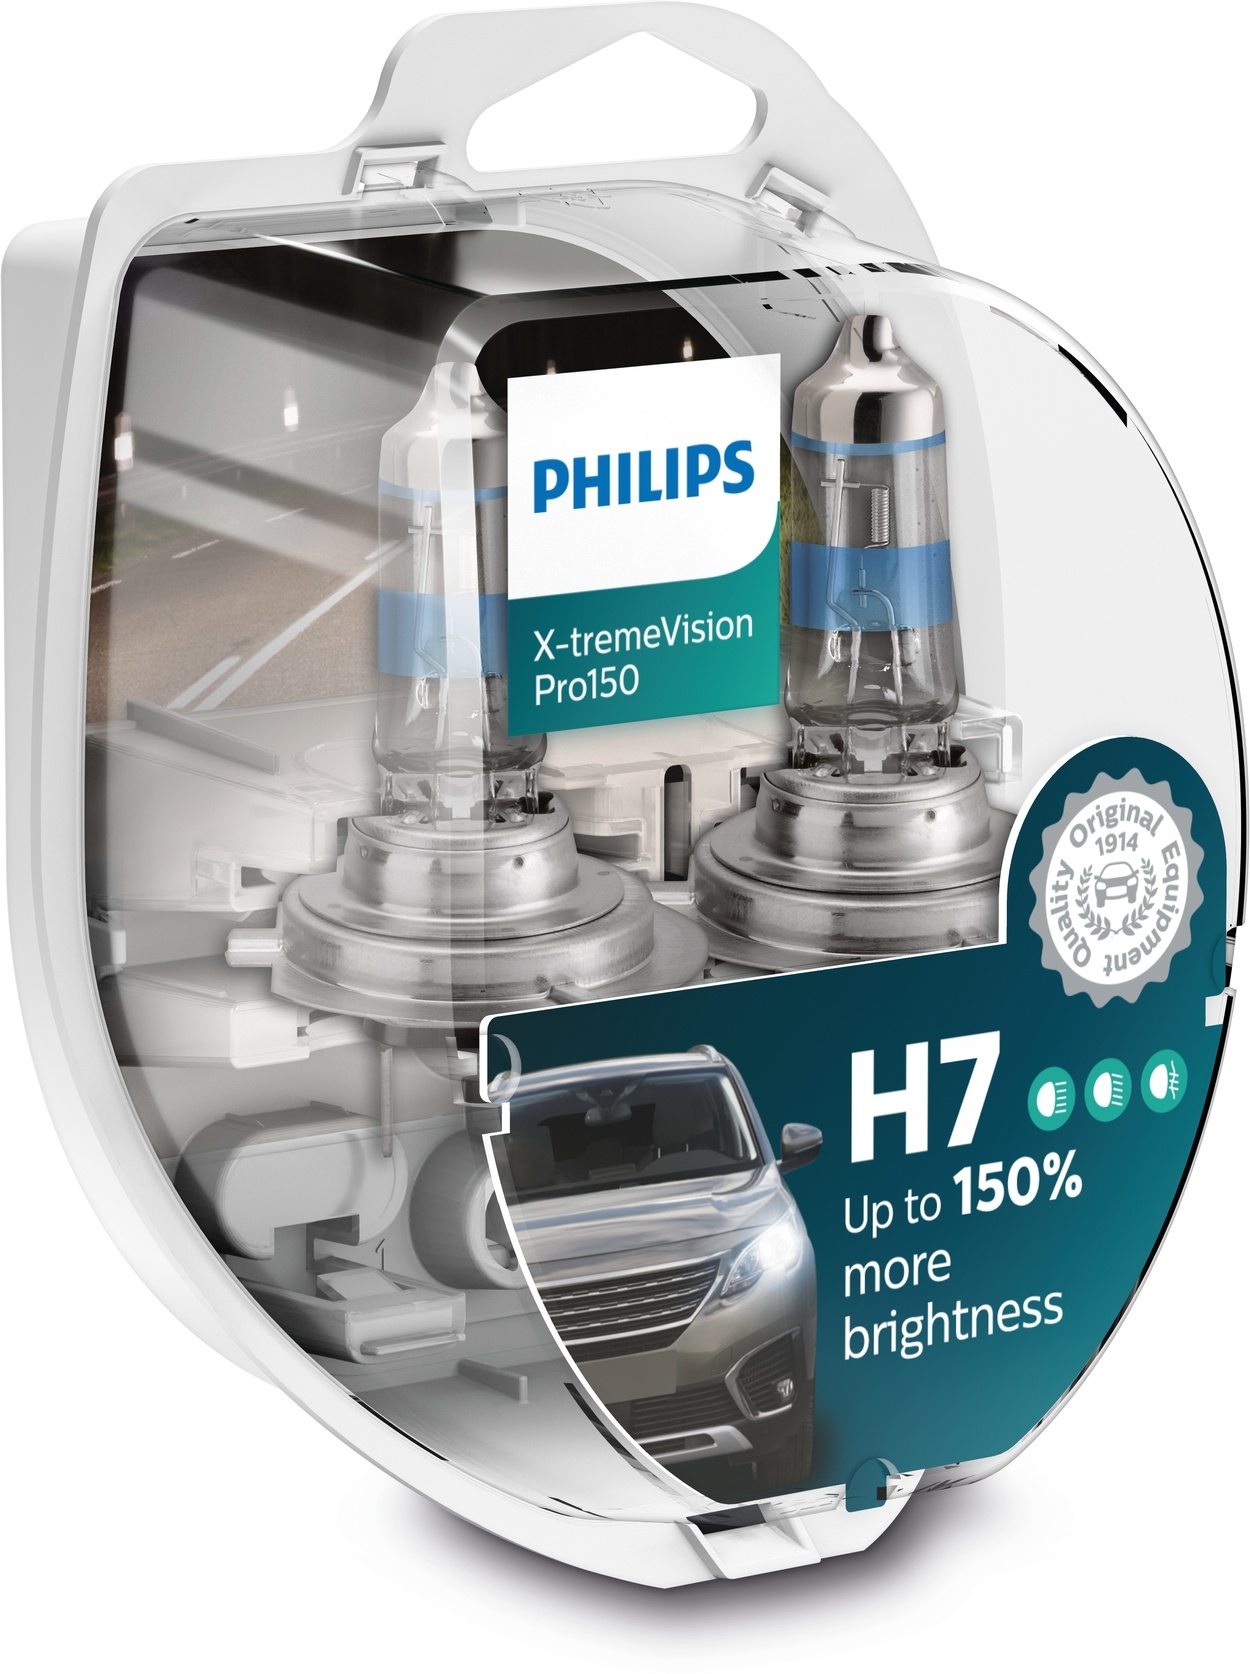 PHILIPS H7 Ampoules Voiture X-tremevision Pro150 12v 55w +150 %